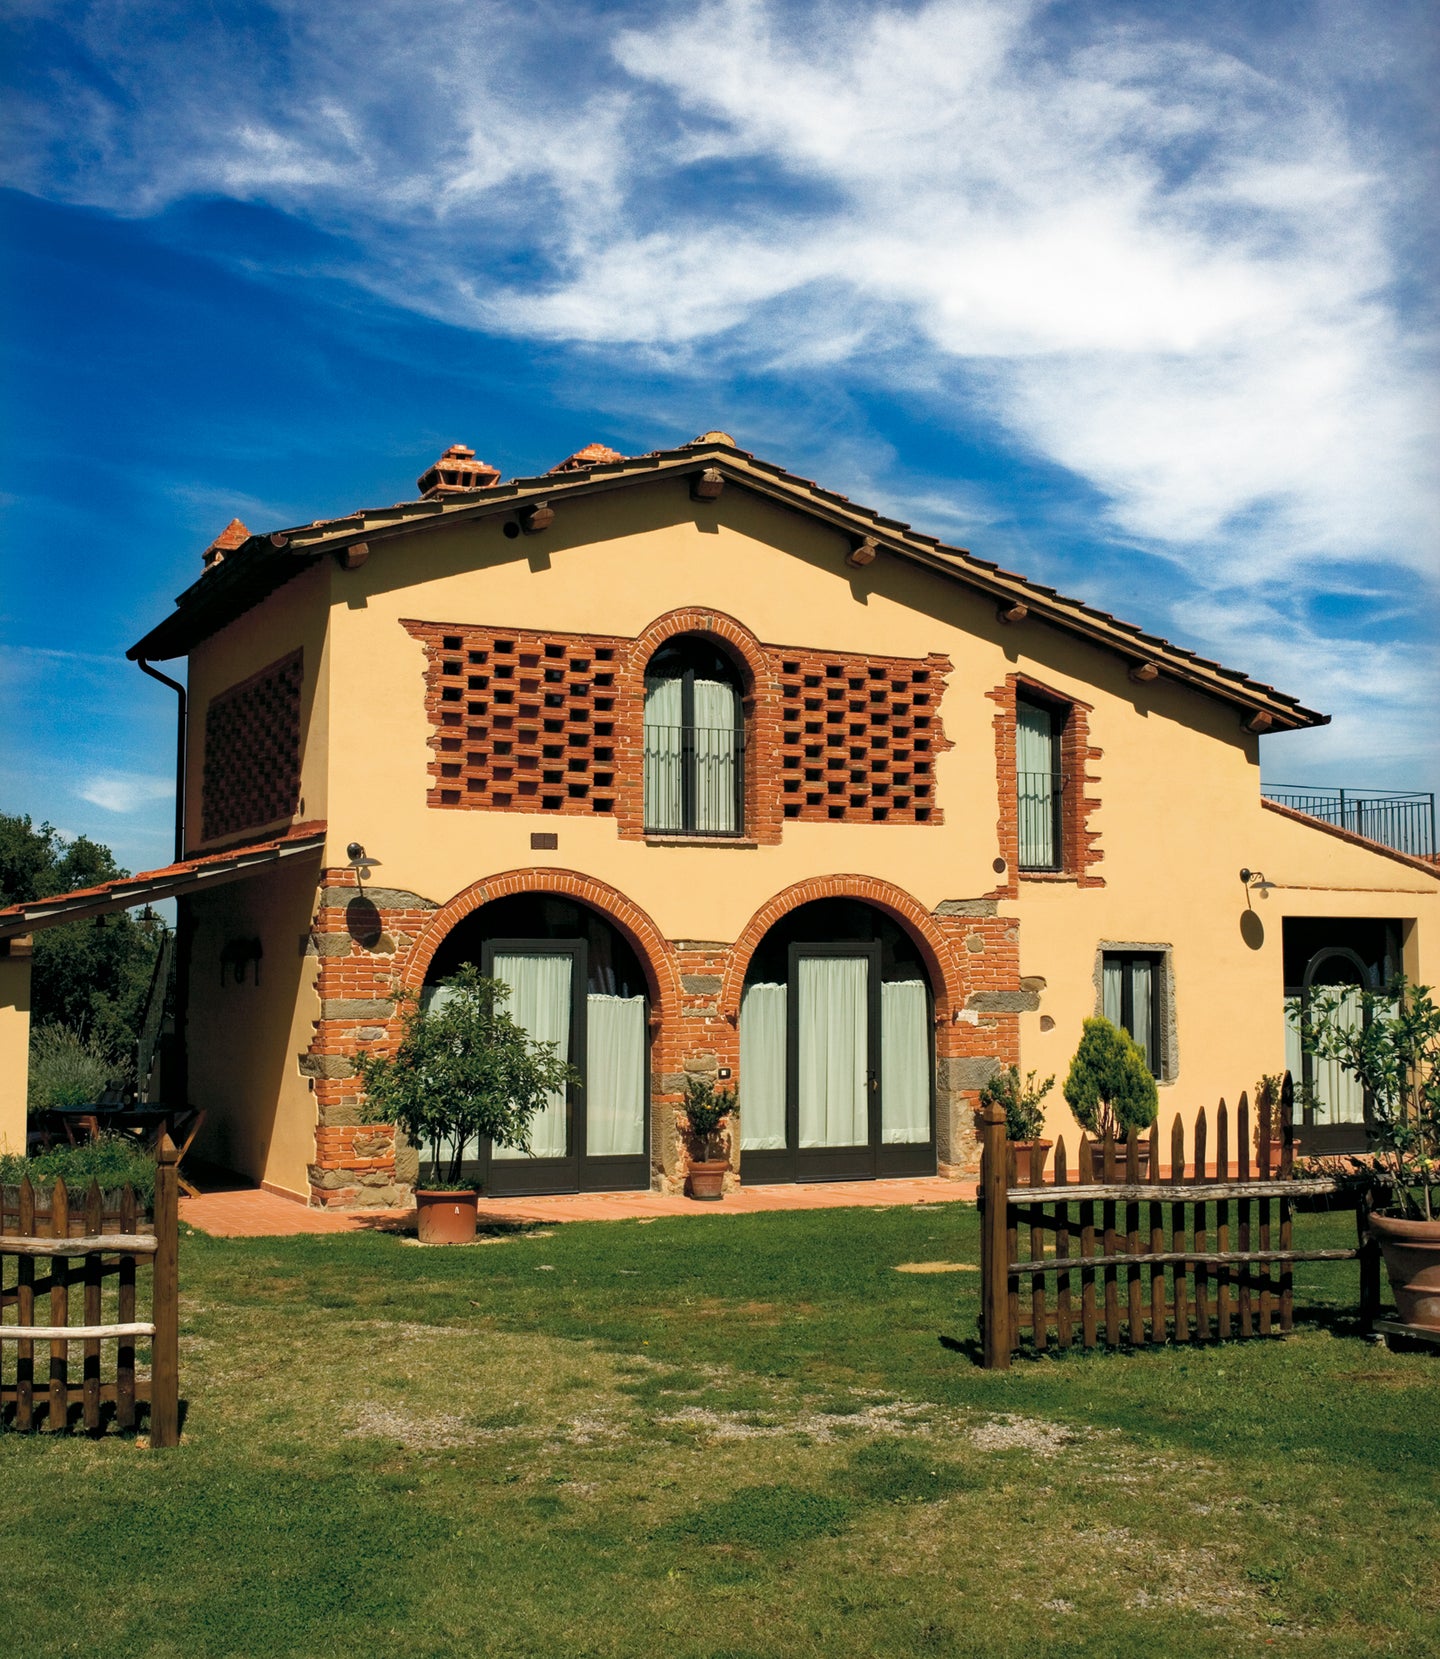 Image of Podere Luisa organic winery located near Arezzo Tuscany